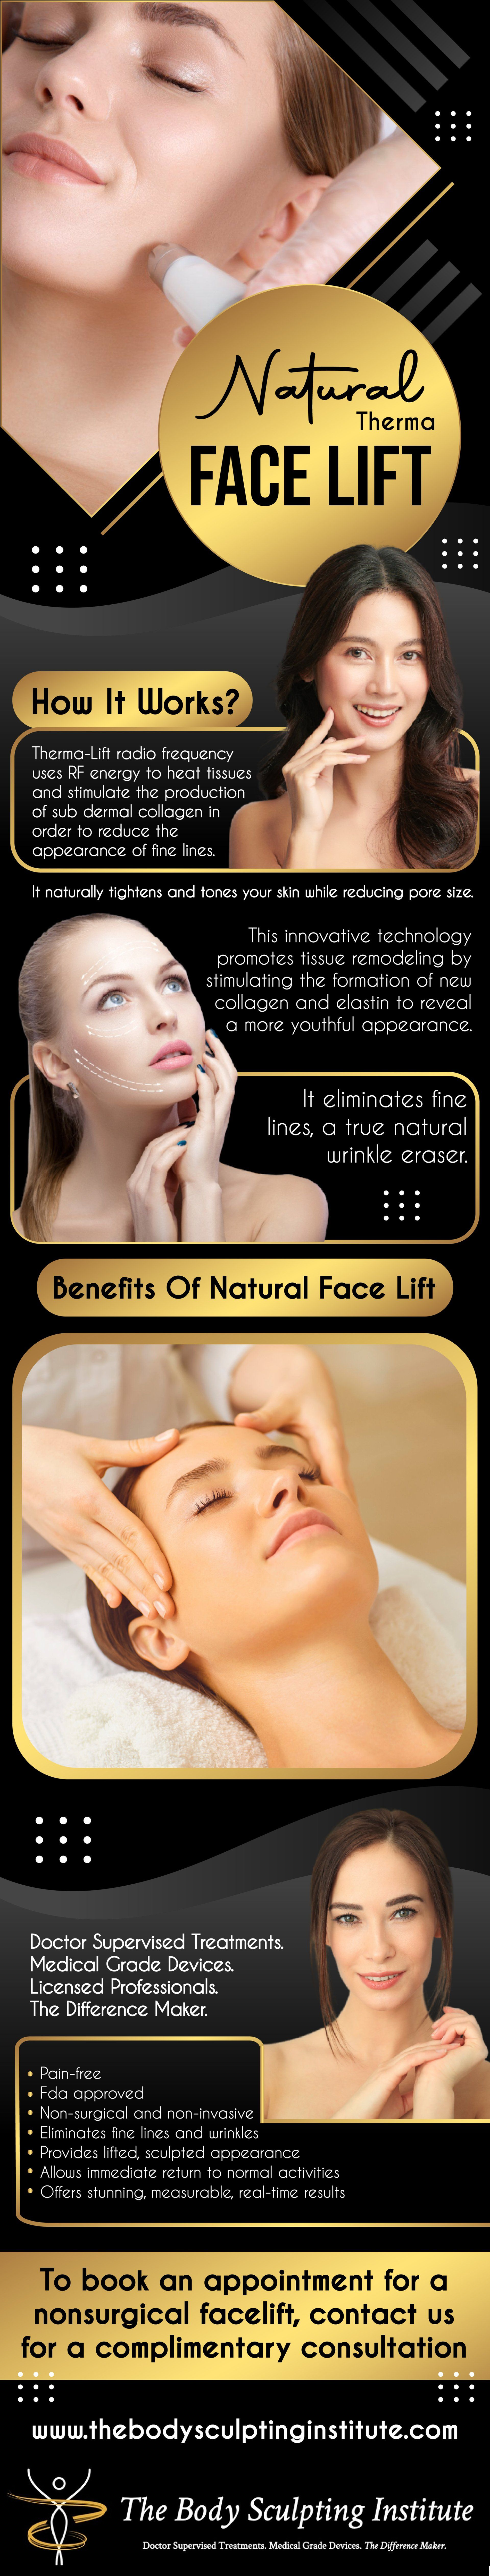 Natural Therma Face Lift